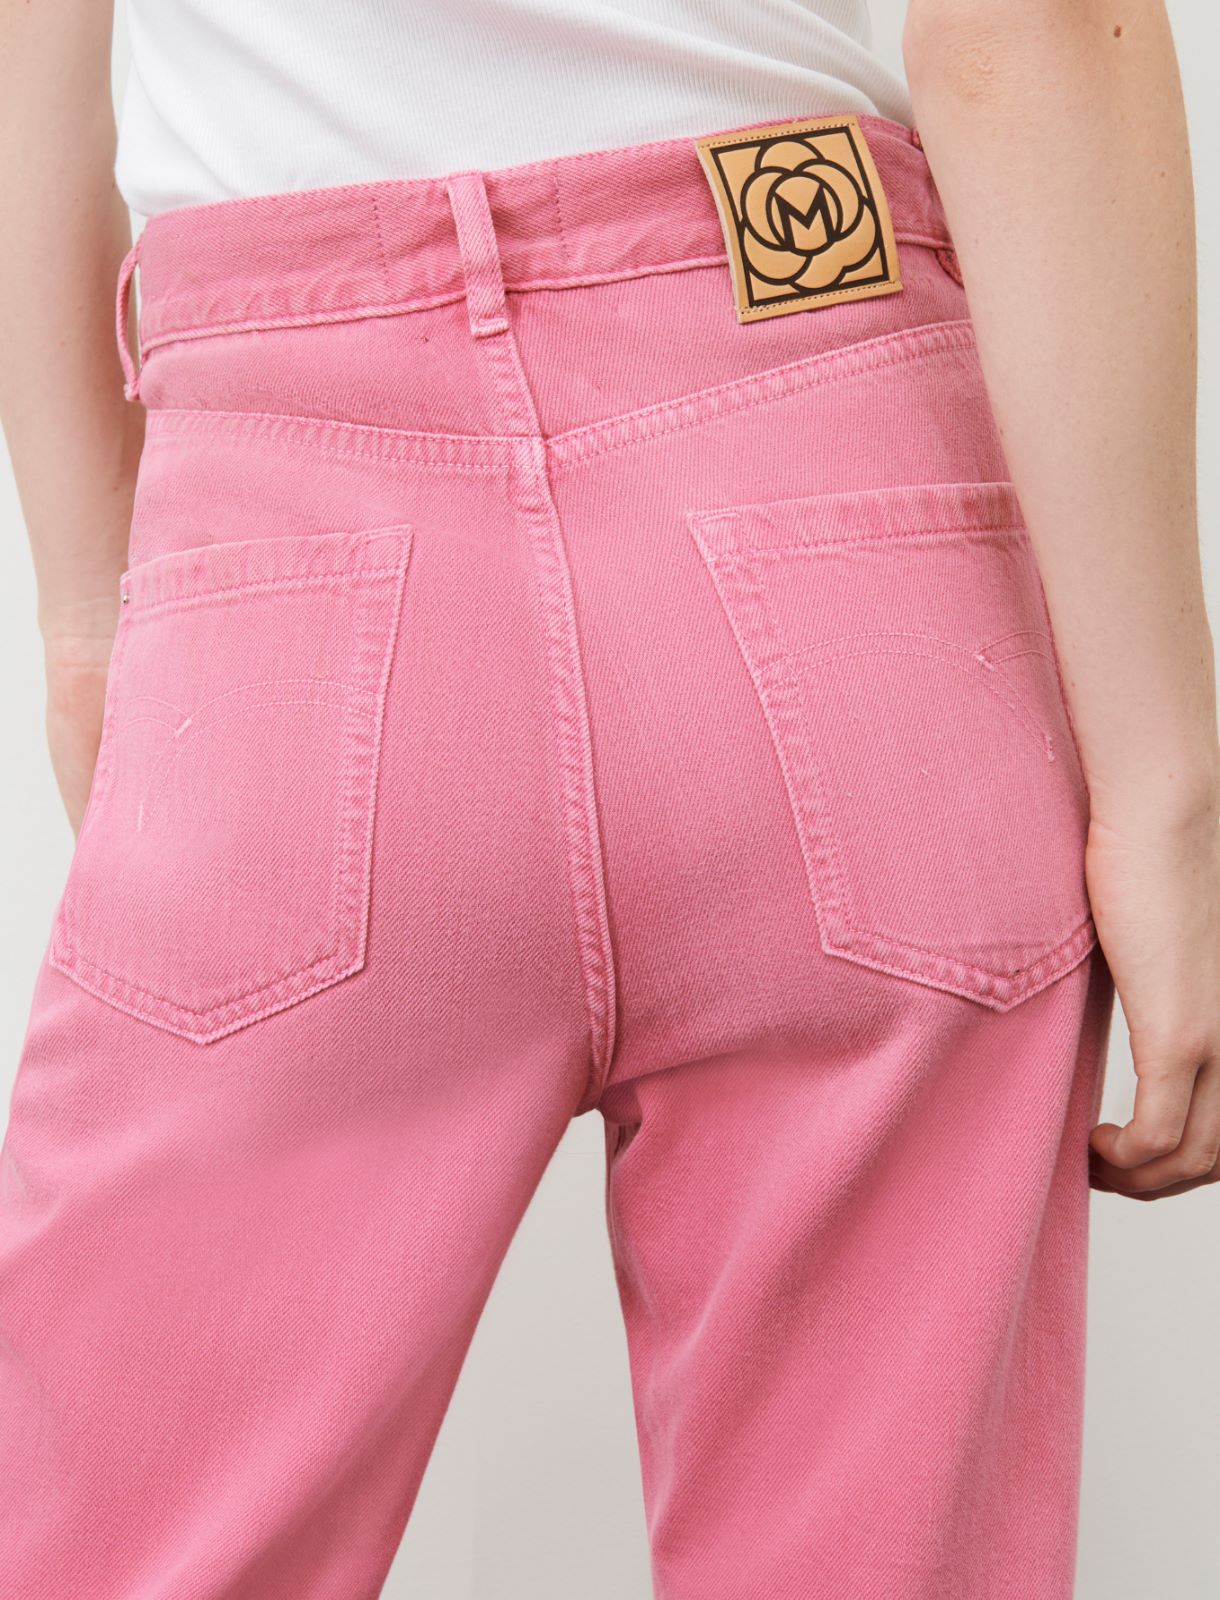 Mom-fit jeans - Shocking pink - Marella - 6